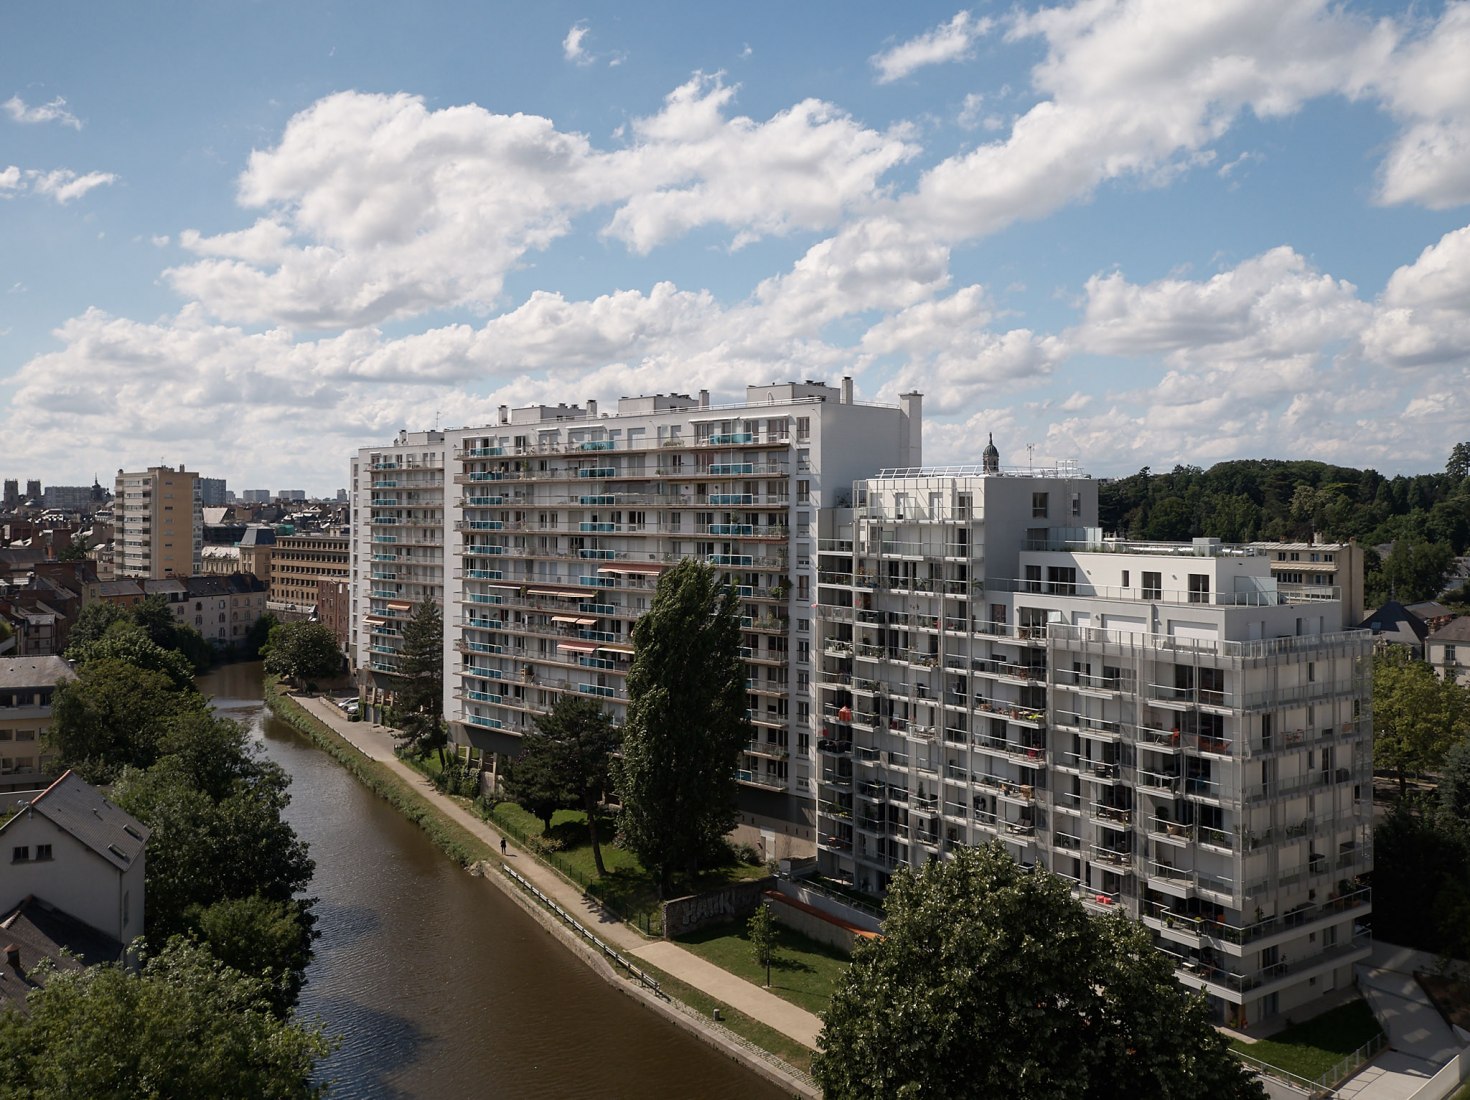 Vista aérea. 94 viviendas y una guardería en ZAC Alphonse Guérin por Le Trionnaire (x2) - Tassot - The Chapelain - a / LTA  architects. Fotografía por ©S.Chalmeau